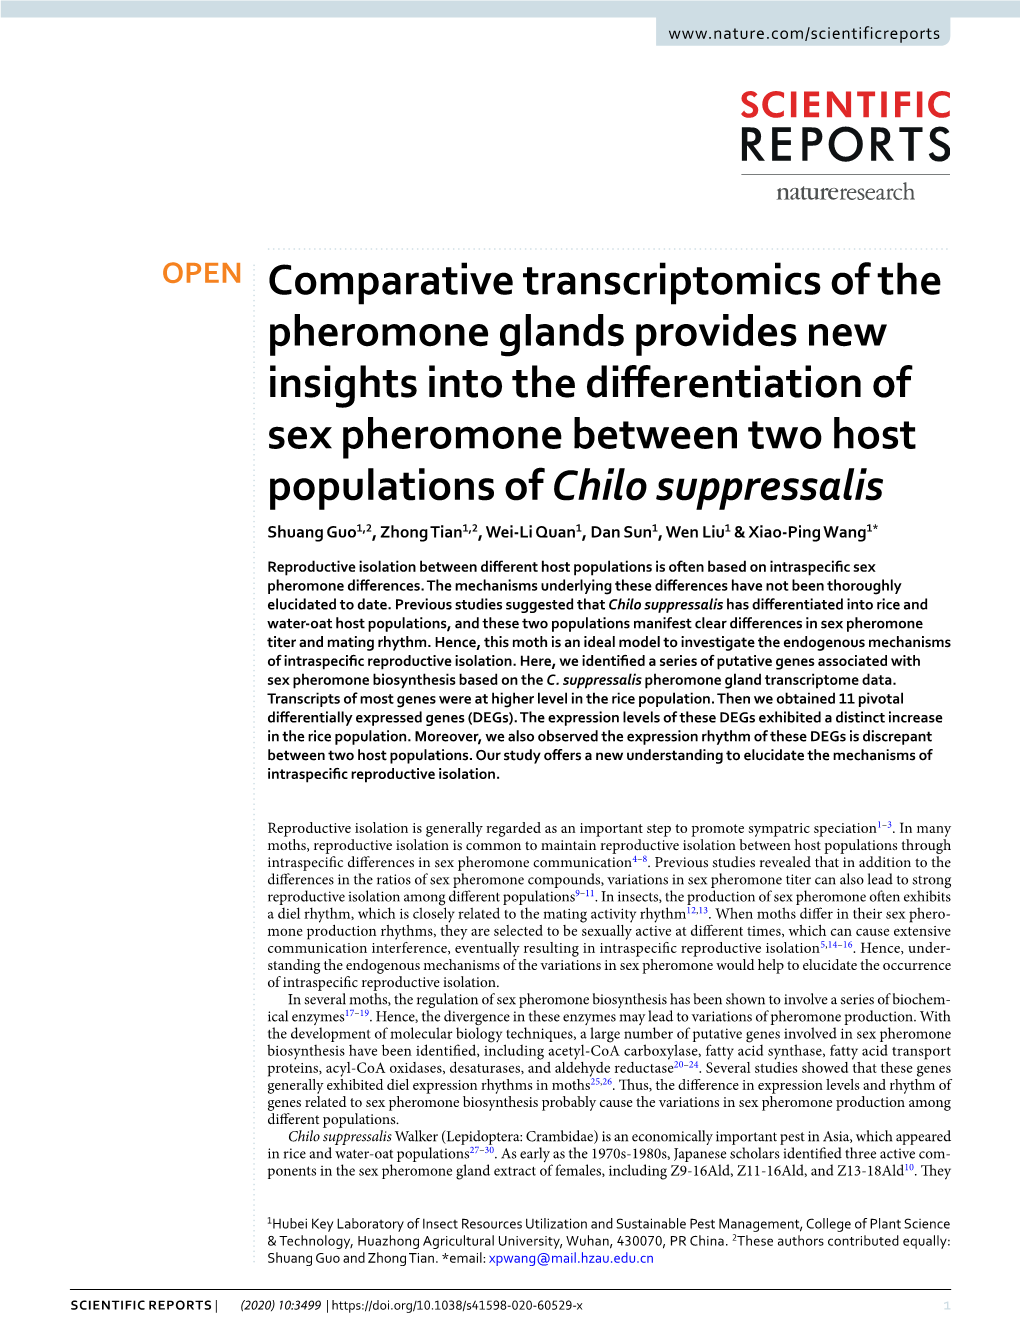 Comparative Transcriptomics of the Pheromone Glands Provides New